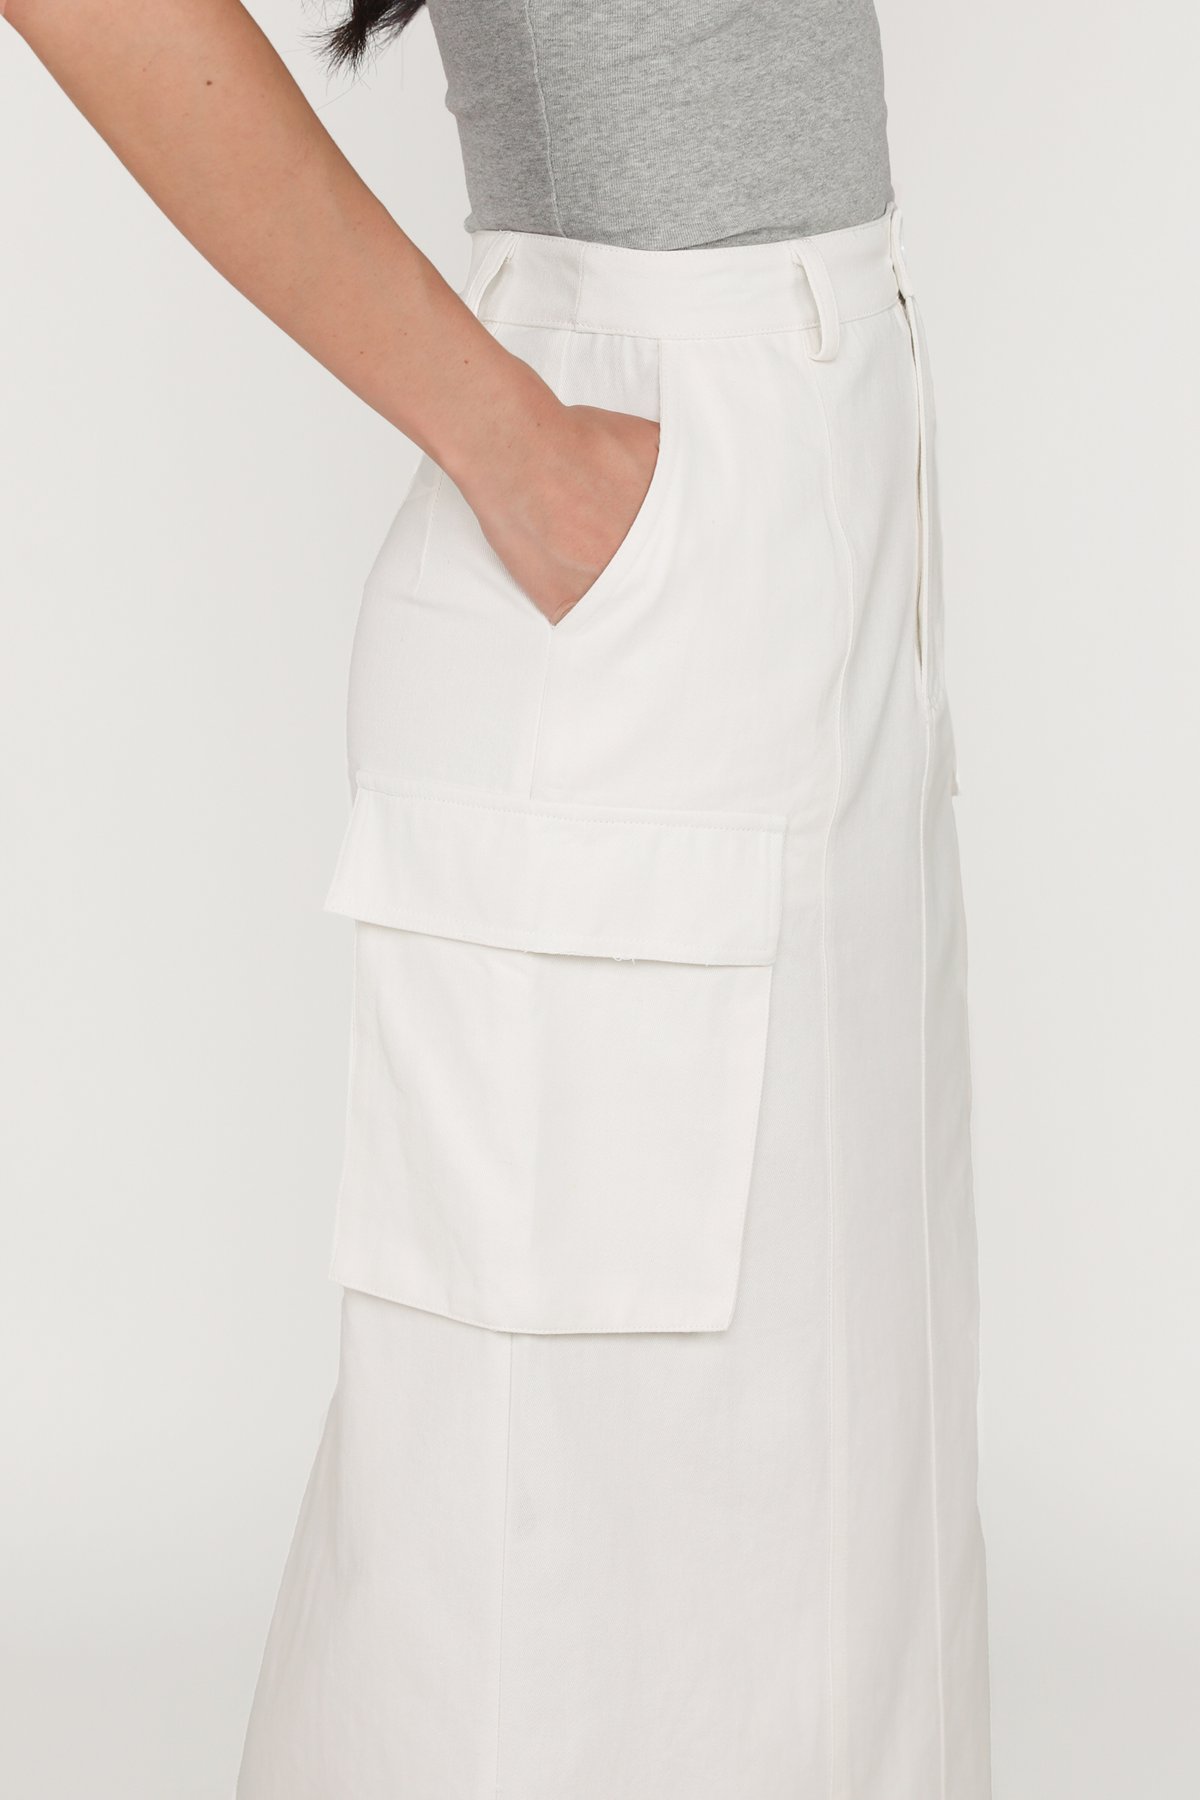 Callas Cargo Skirt (White)